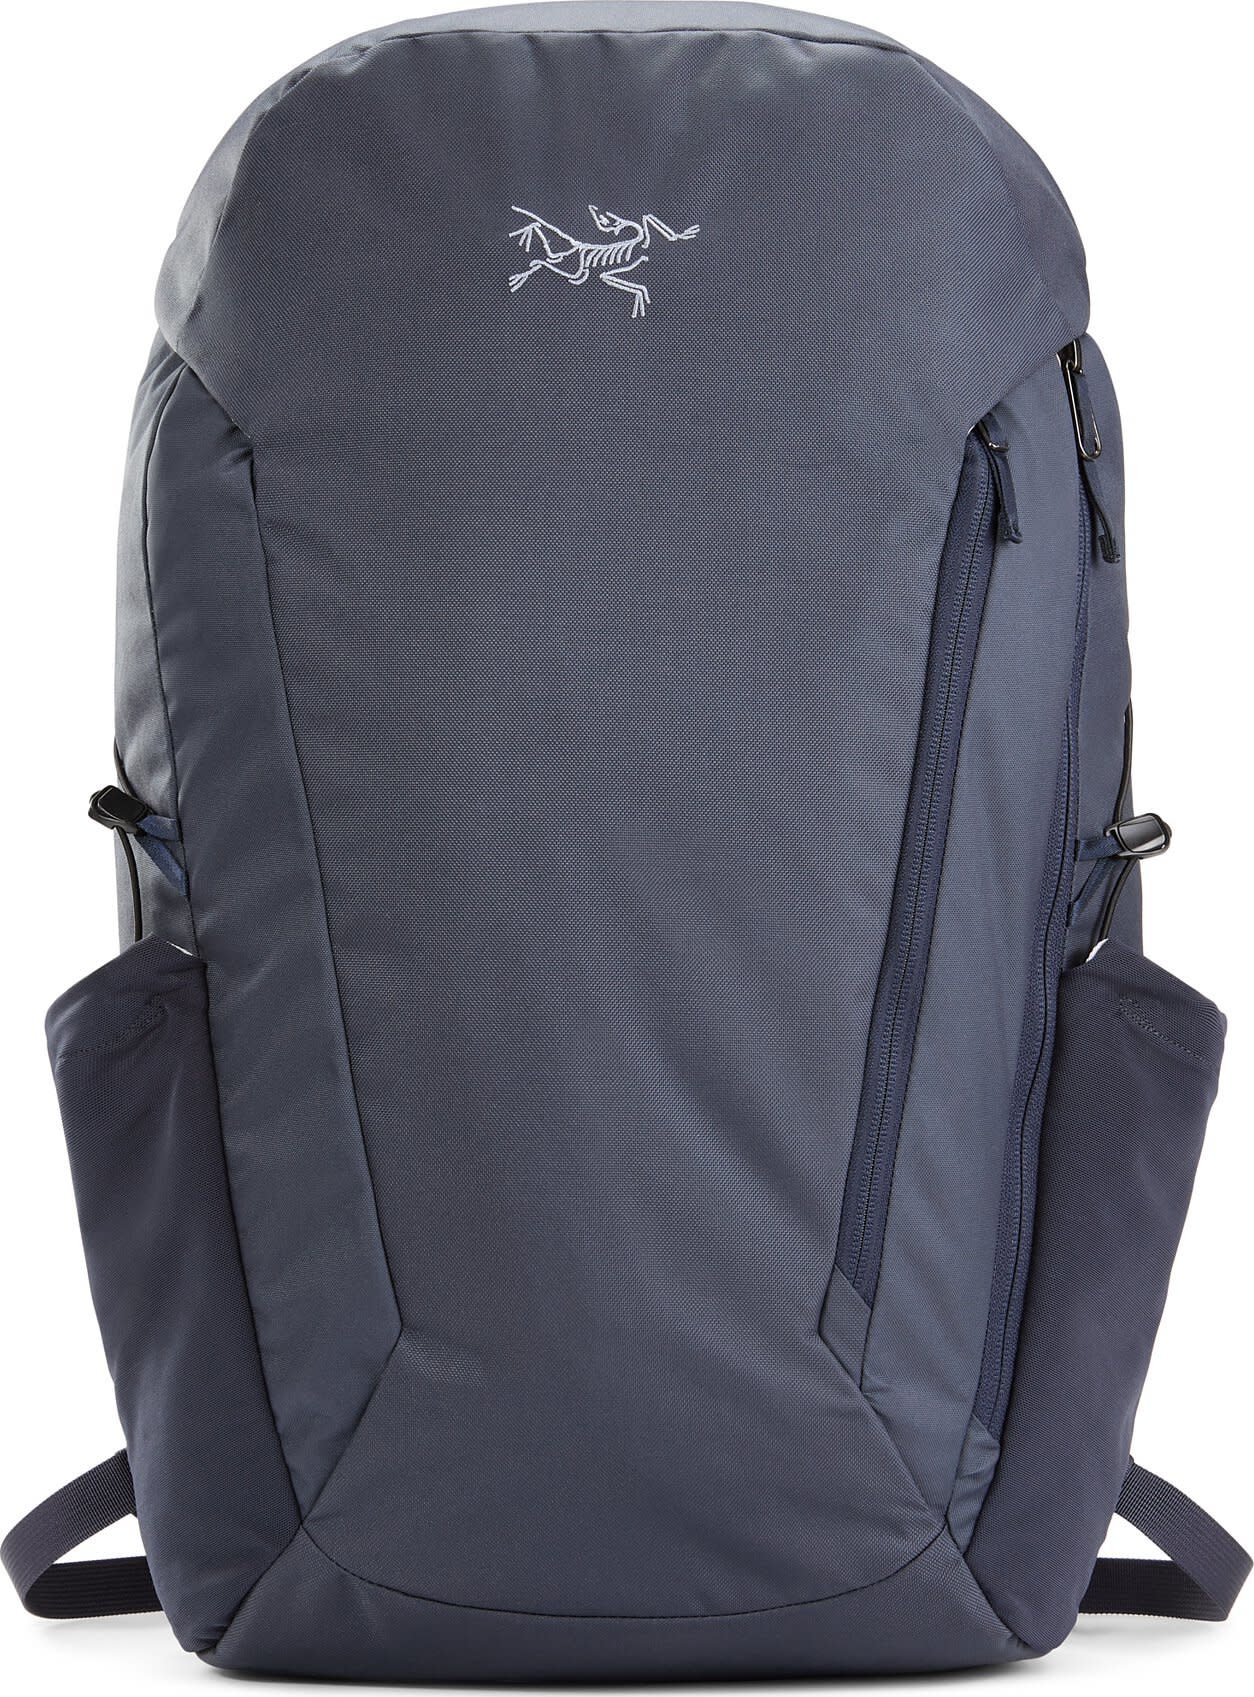 Mantis 30 Backpack Black Sapphire